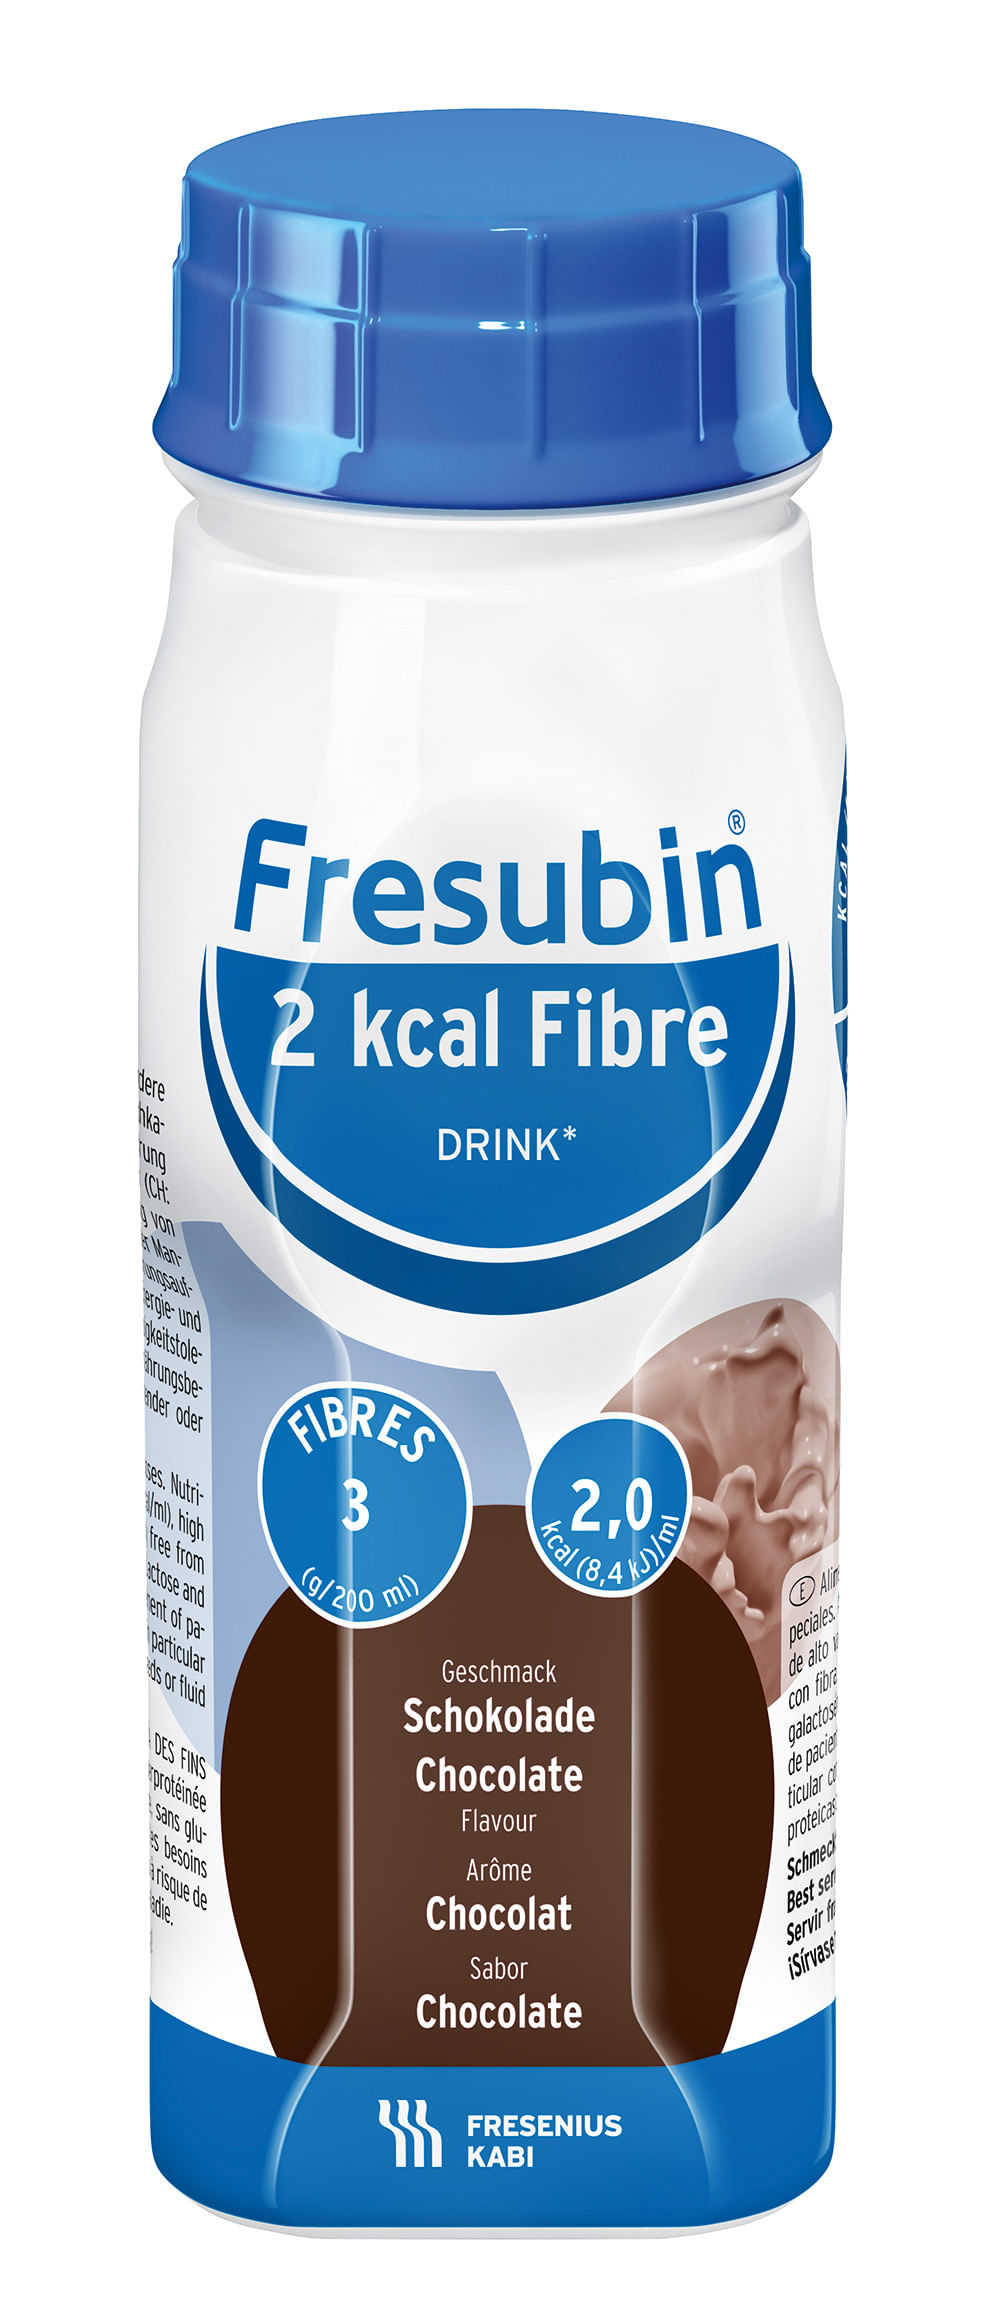 Fresubin_2kcal_Fibre_Chocolate_EBo_Frontal